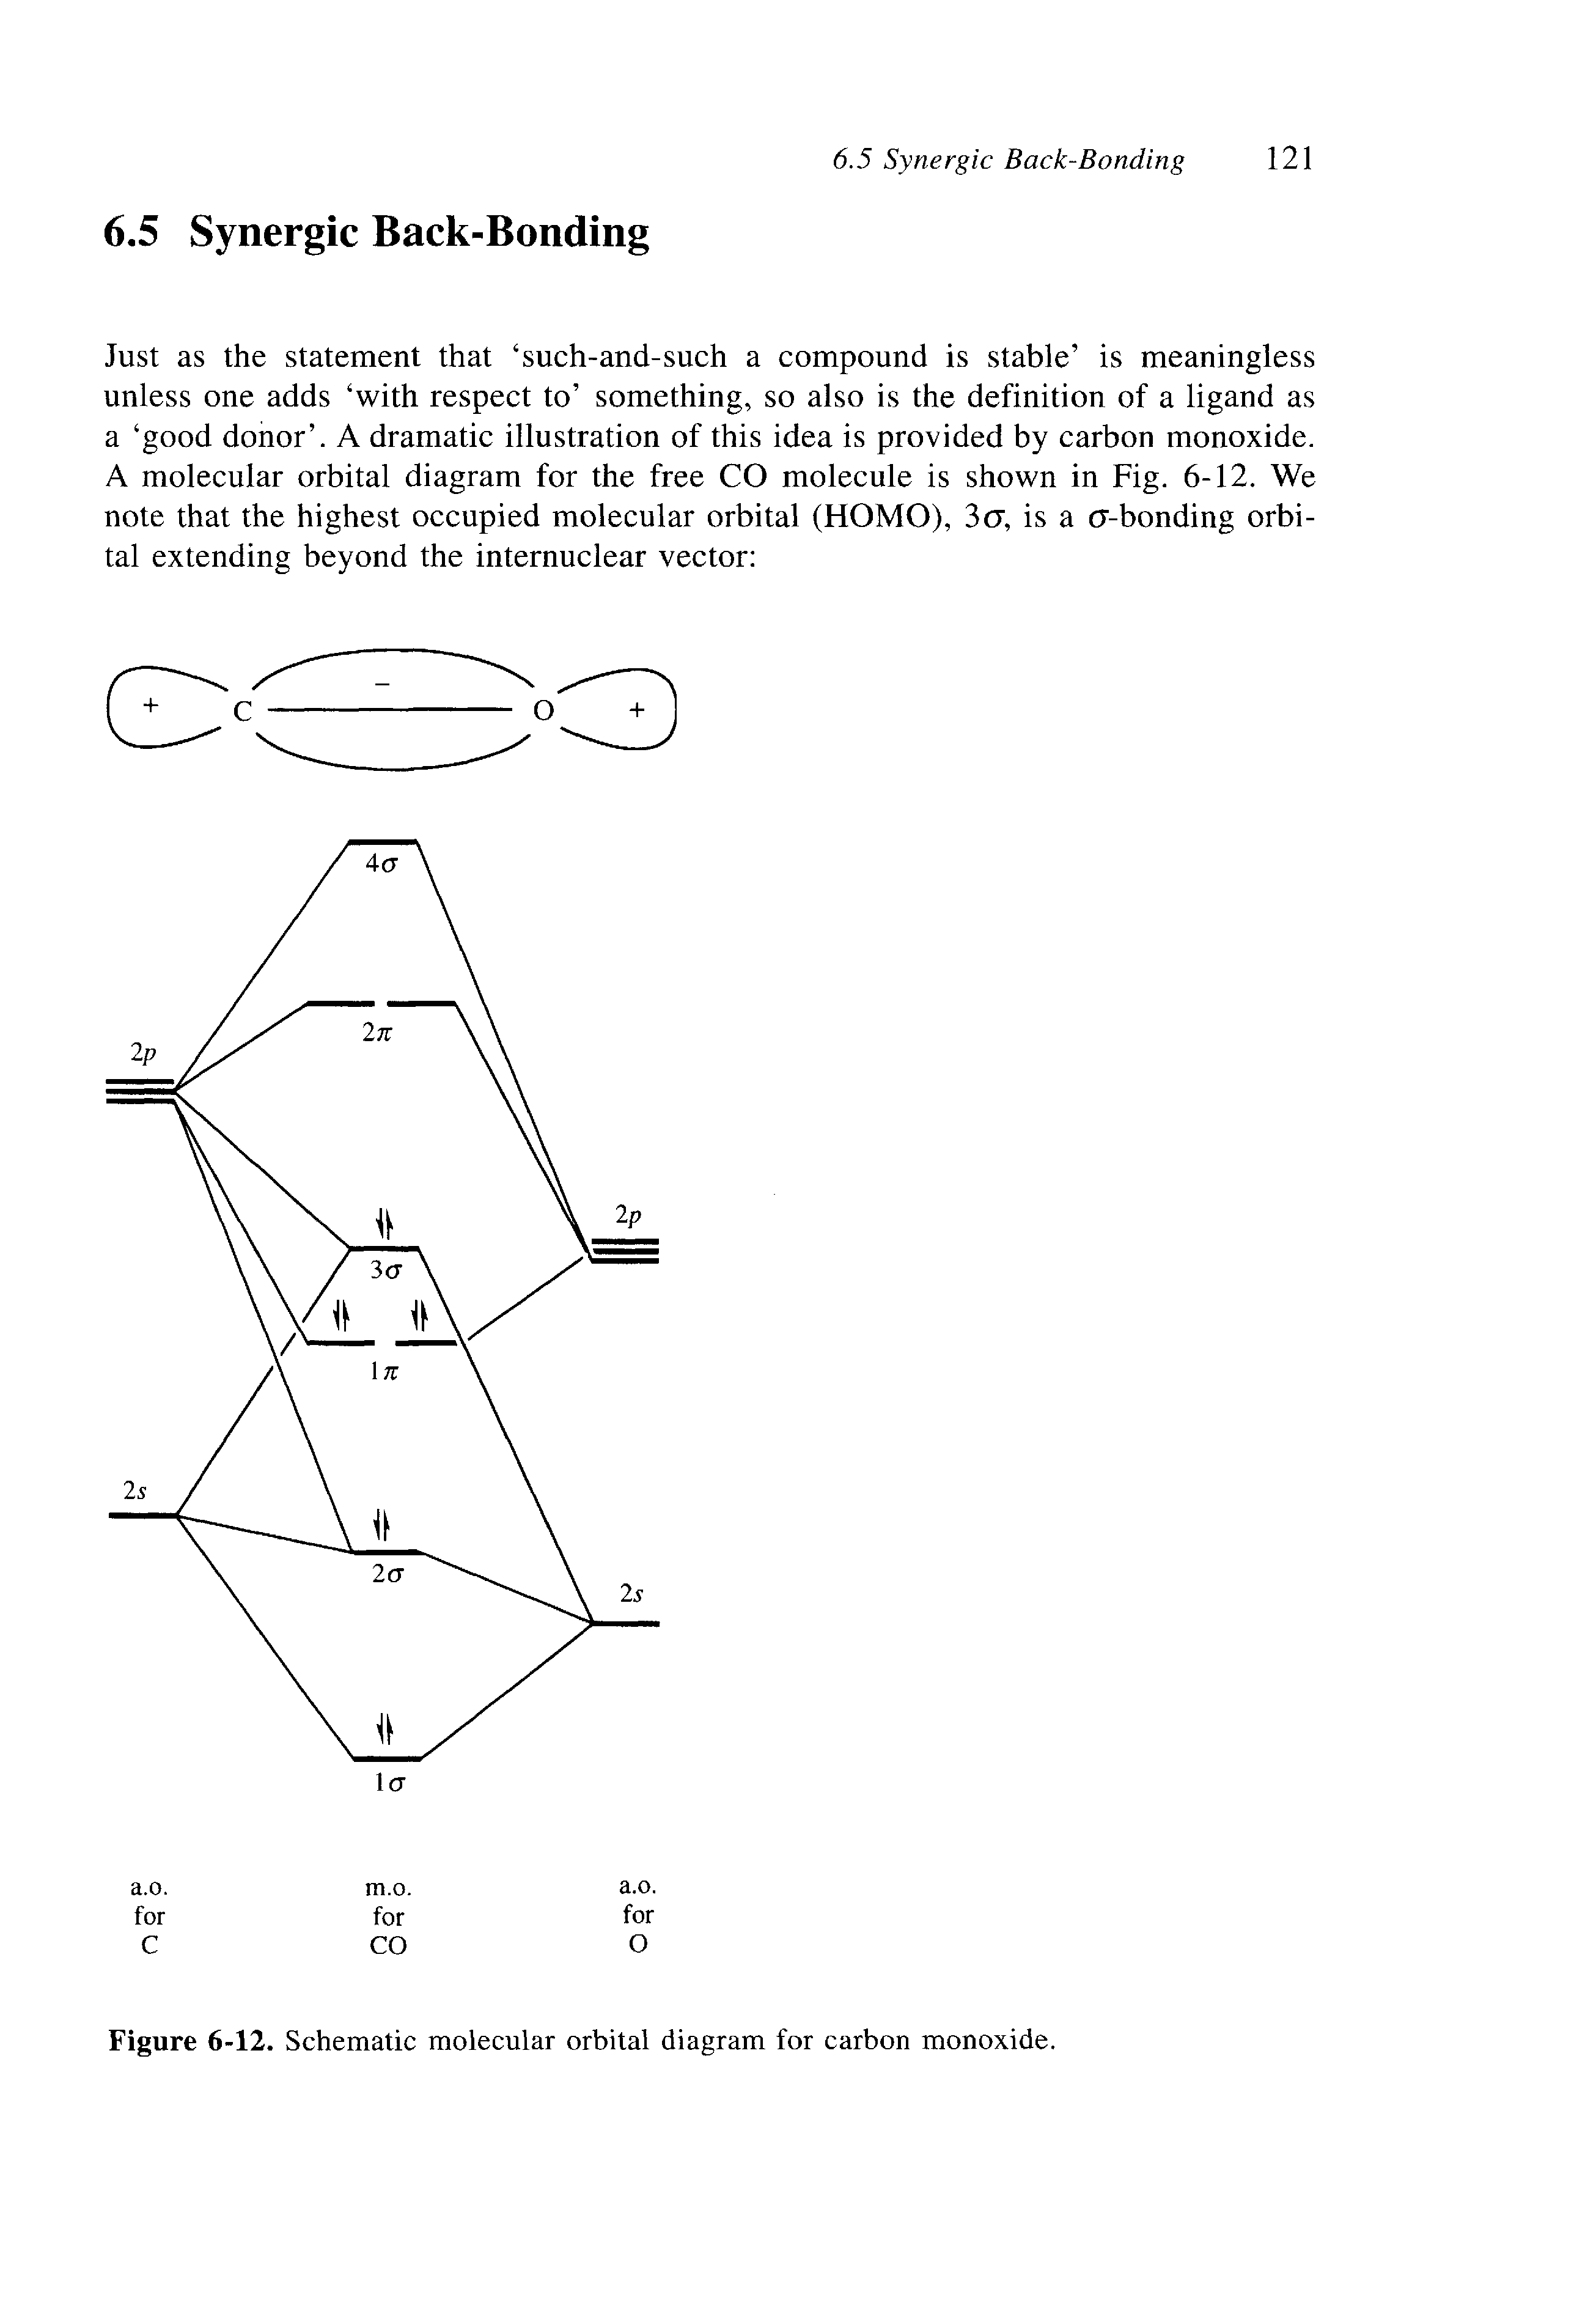 Figure 6-12. Schematic molecular orbital diagram for carbon monoxide.